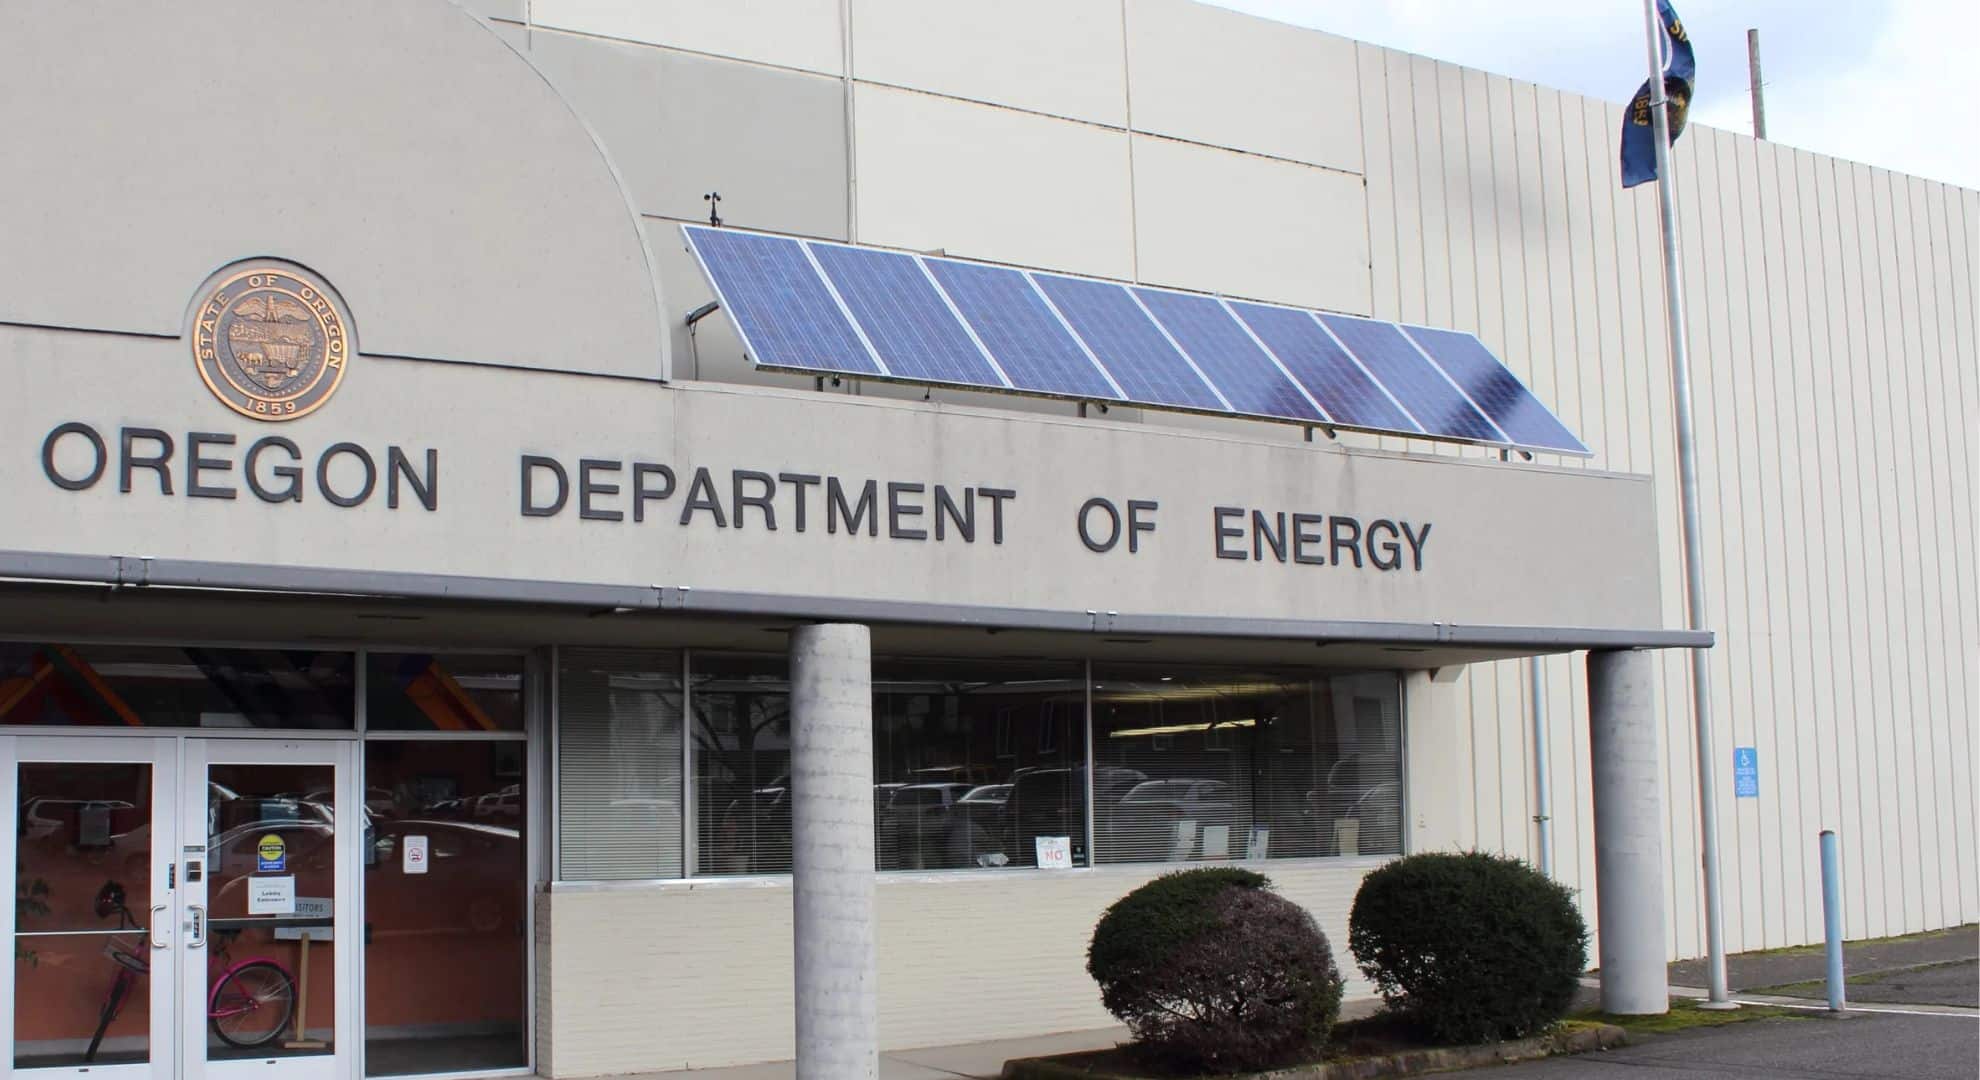 Oregon department of energy building